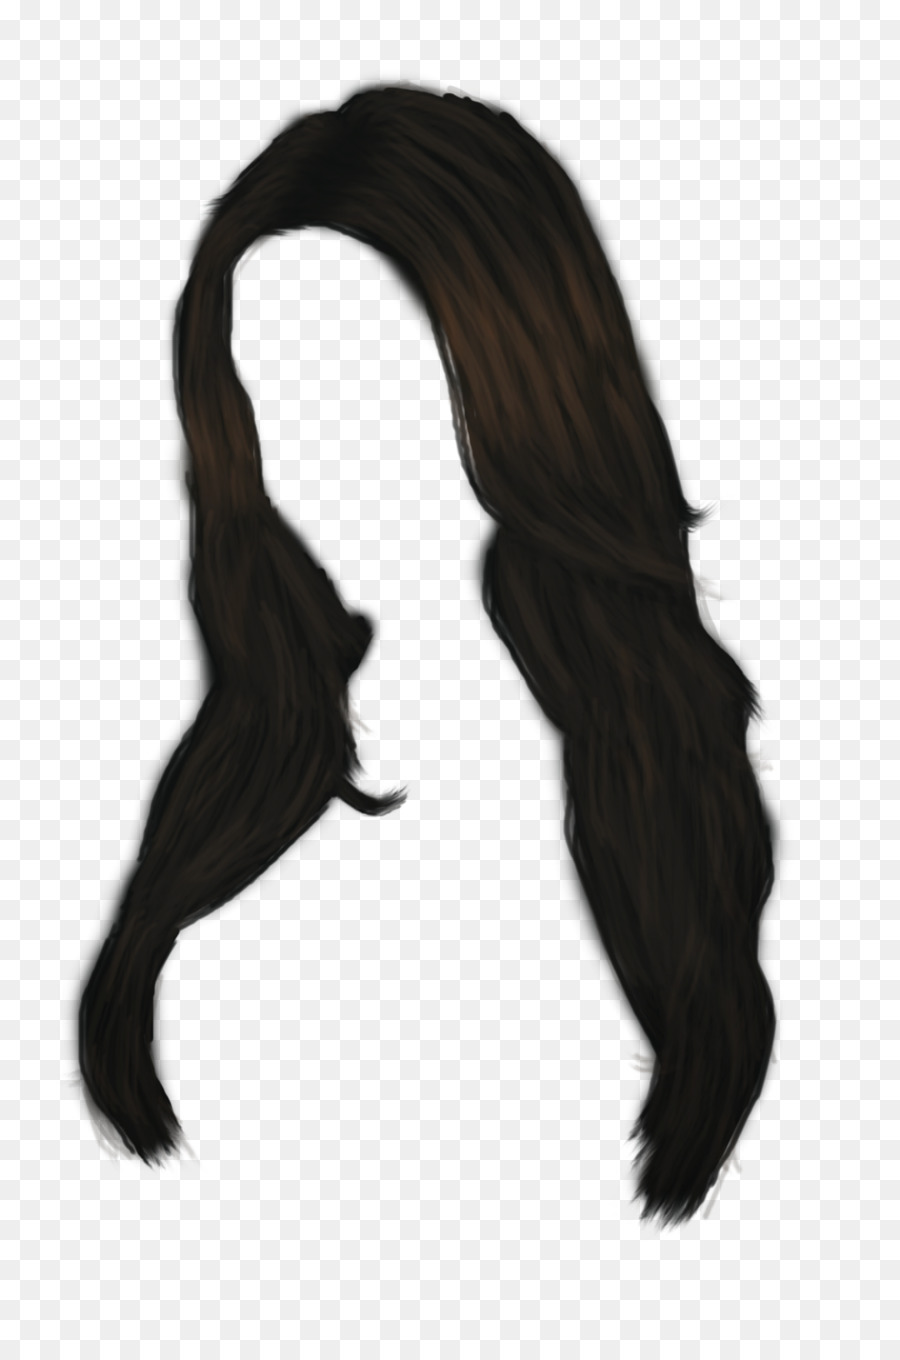 Black hair Long hair Clip art - hairs png download - 1024*1542 - Free Transparent Hair png Download.